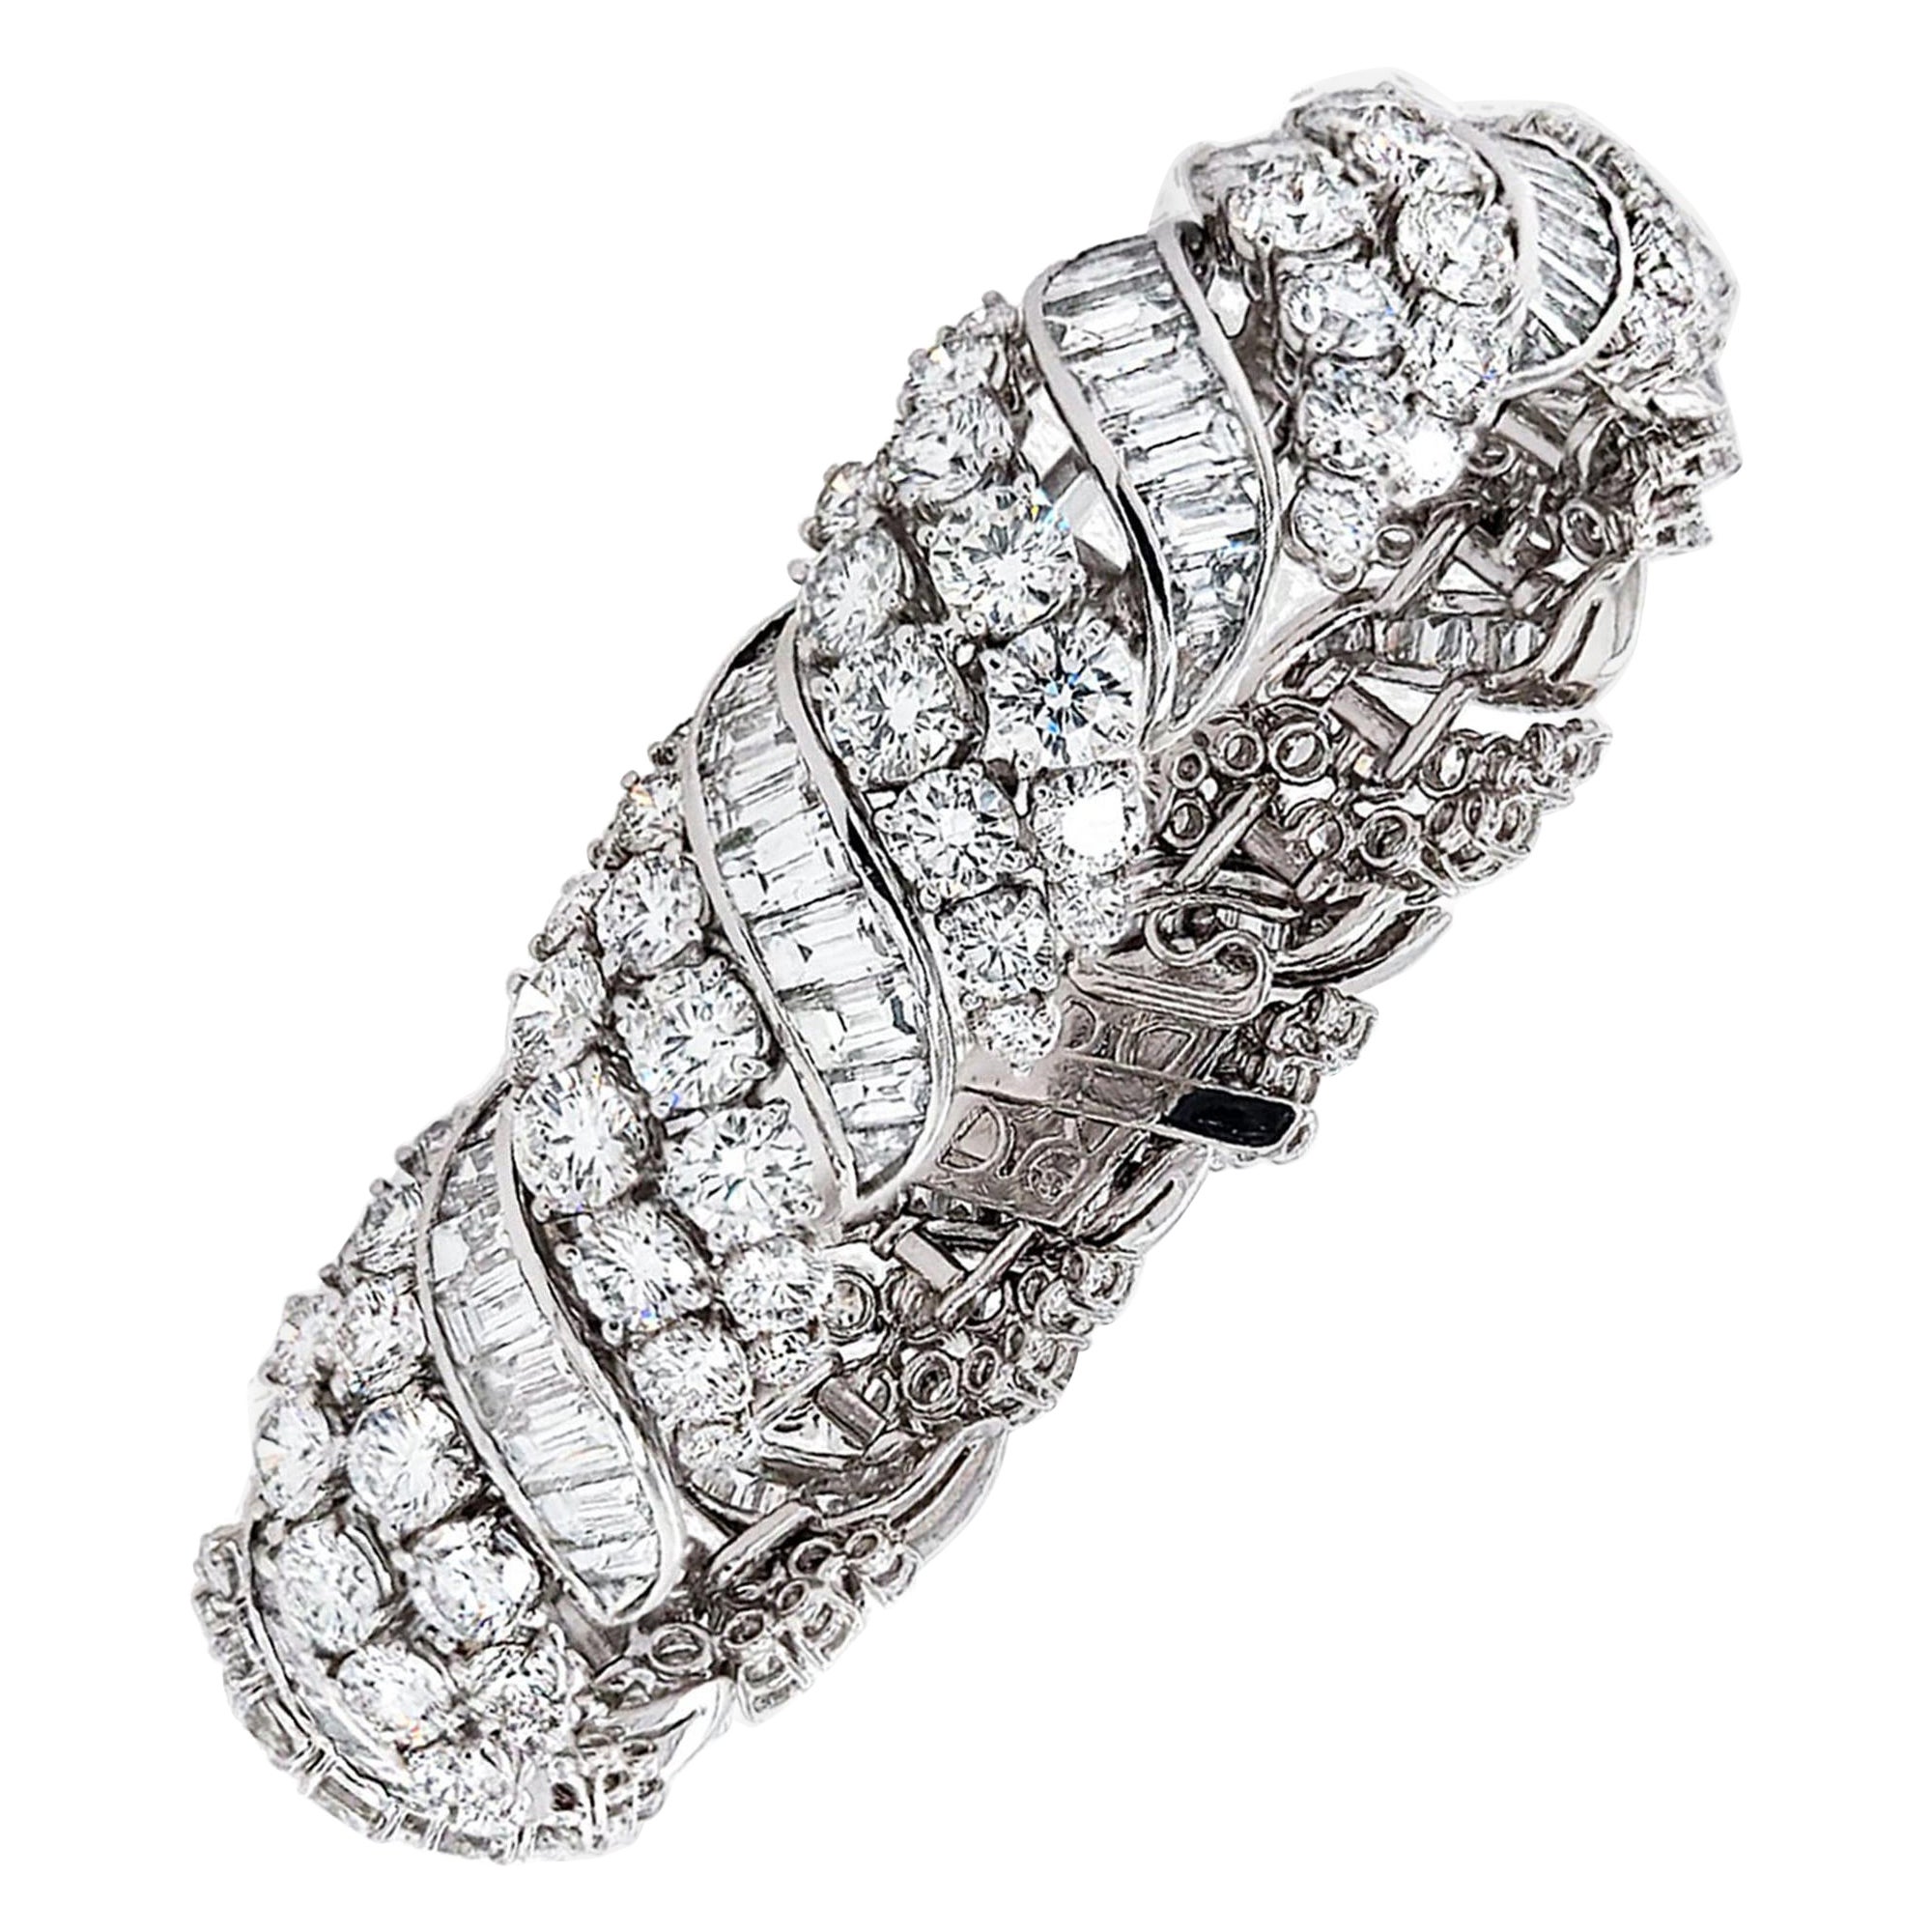 34 Carat Diamond Platinum Scroll Bracelet